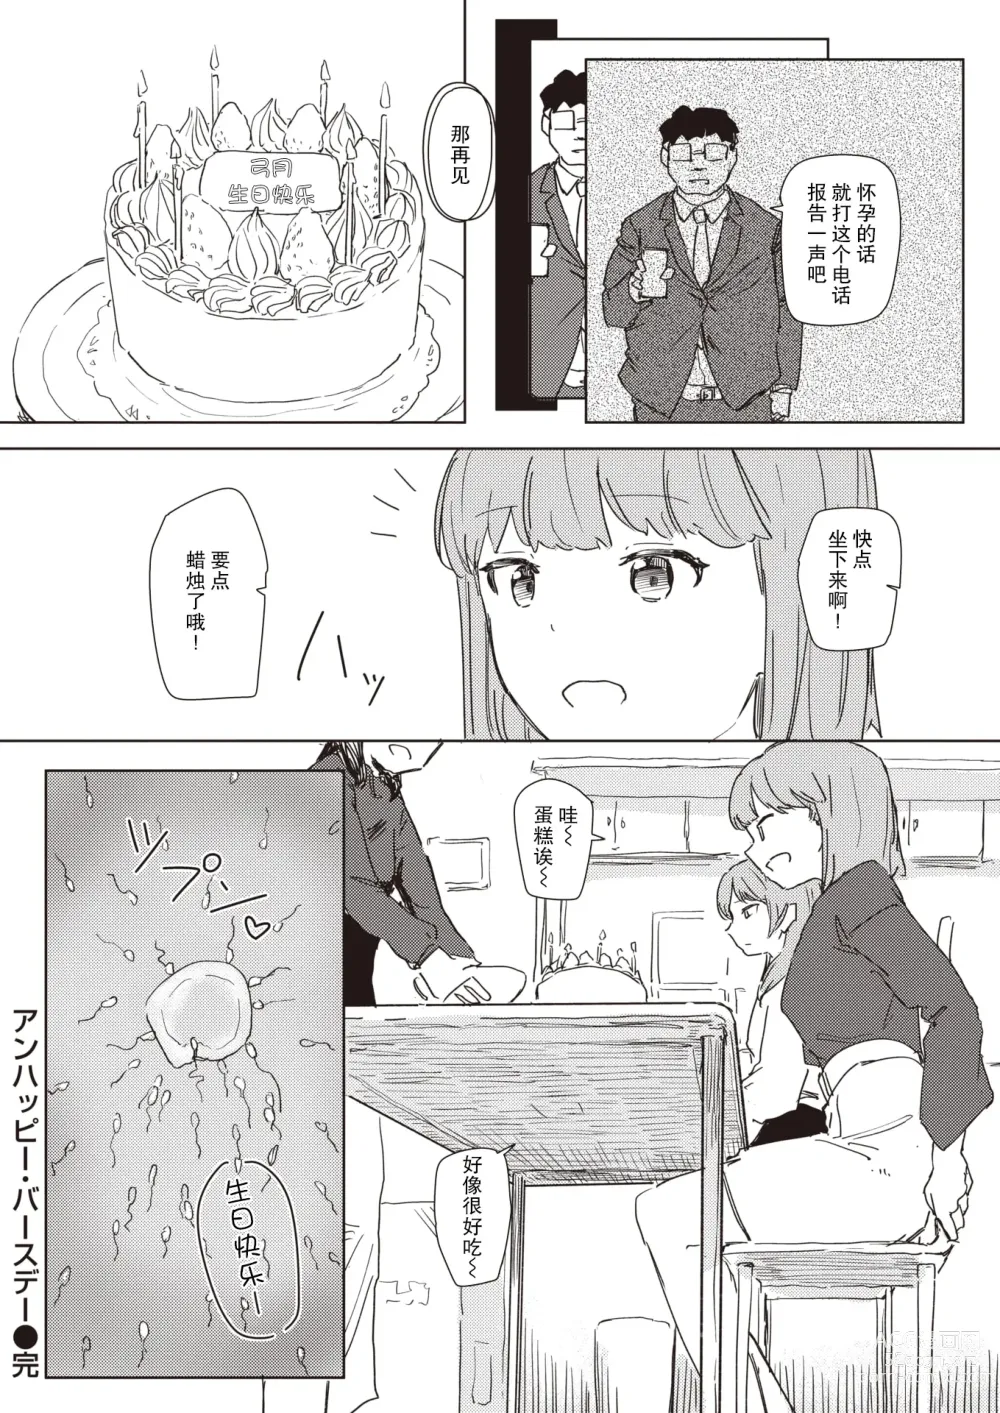 Page 25 of manga Unhappy Birthday